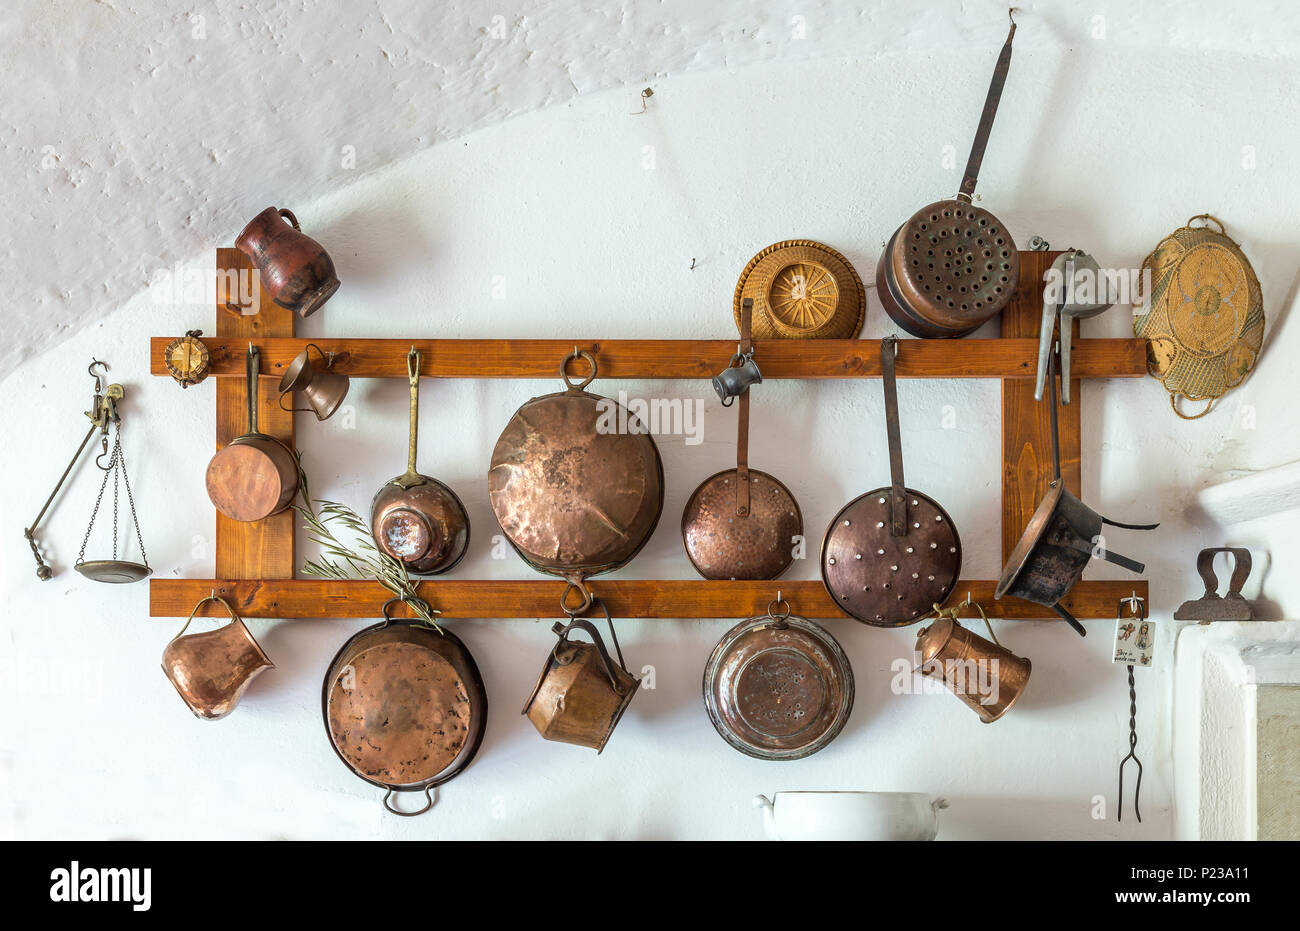 copper kitchenware of an old kitchen. Abruzzo Stock Photo